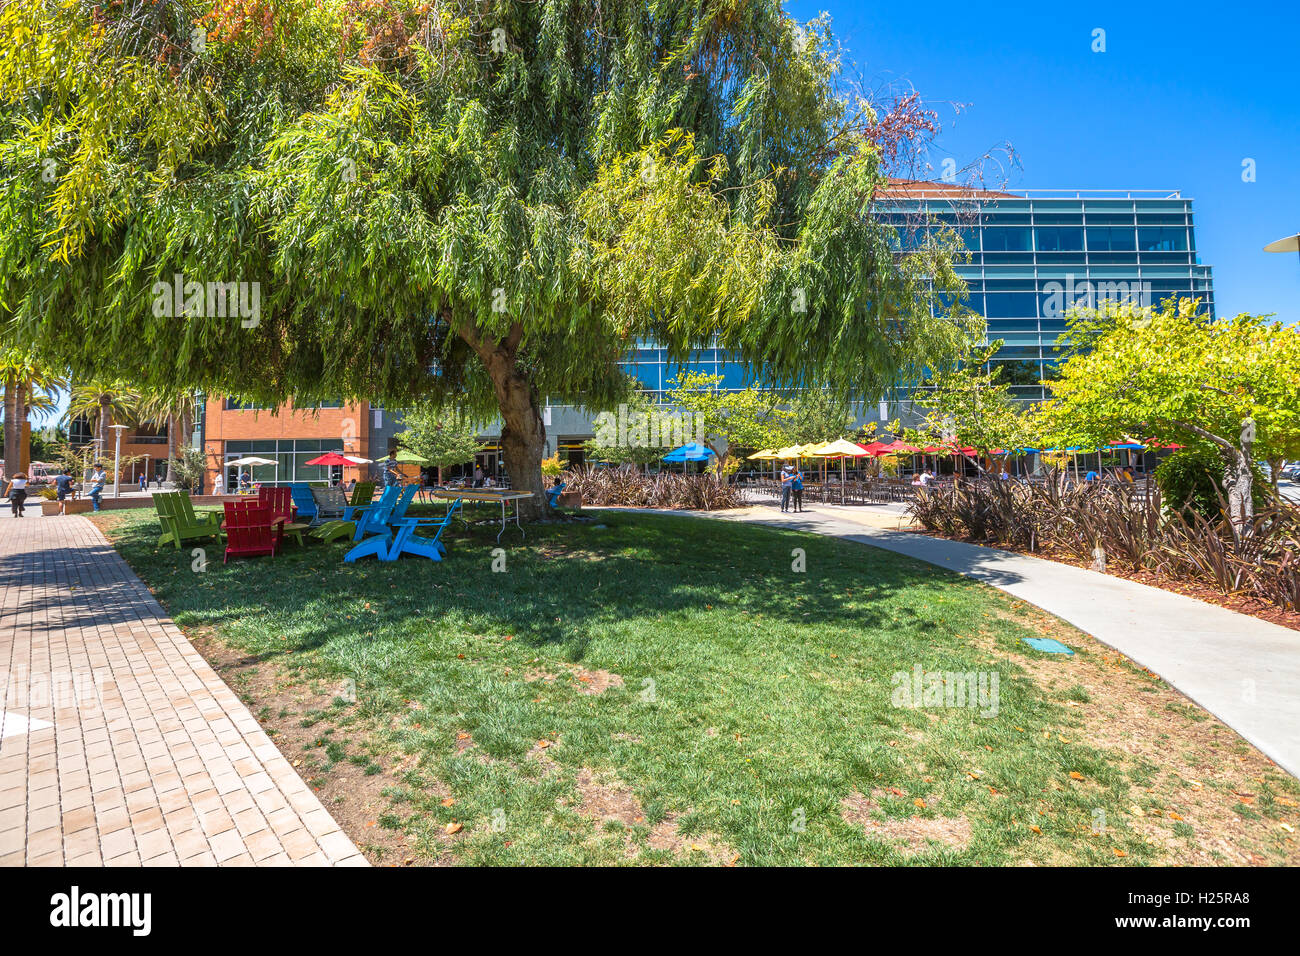 Google headquarters relaxing area Stock Photo